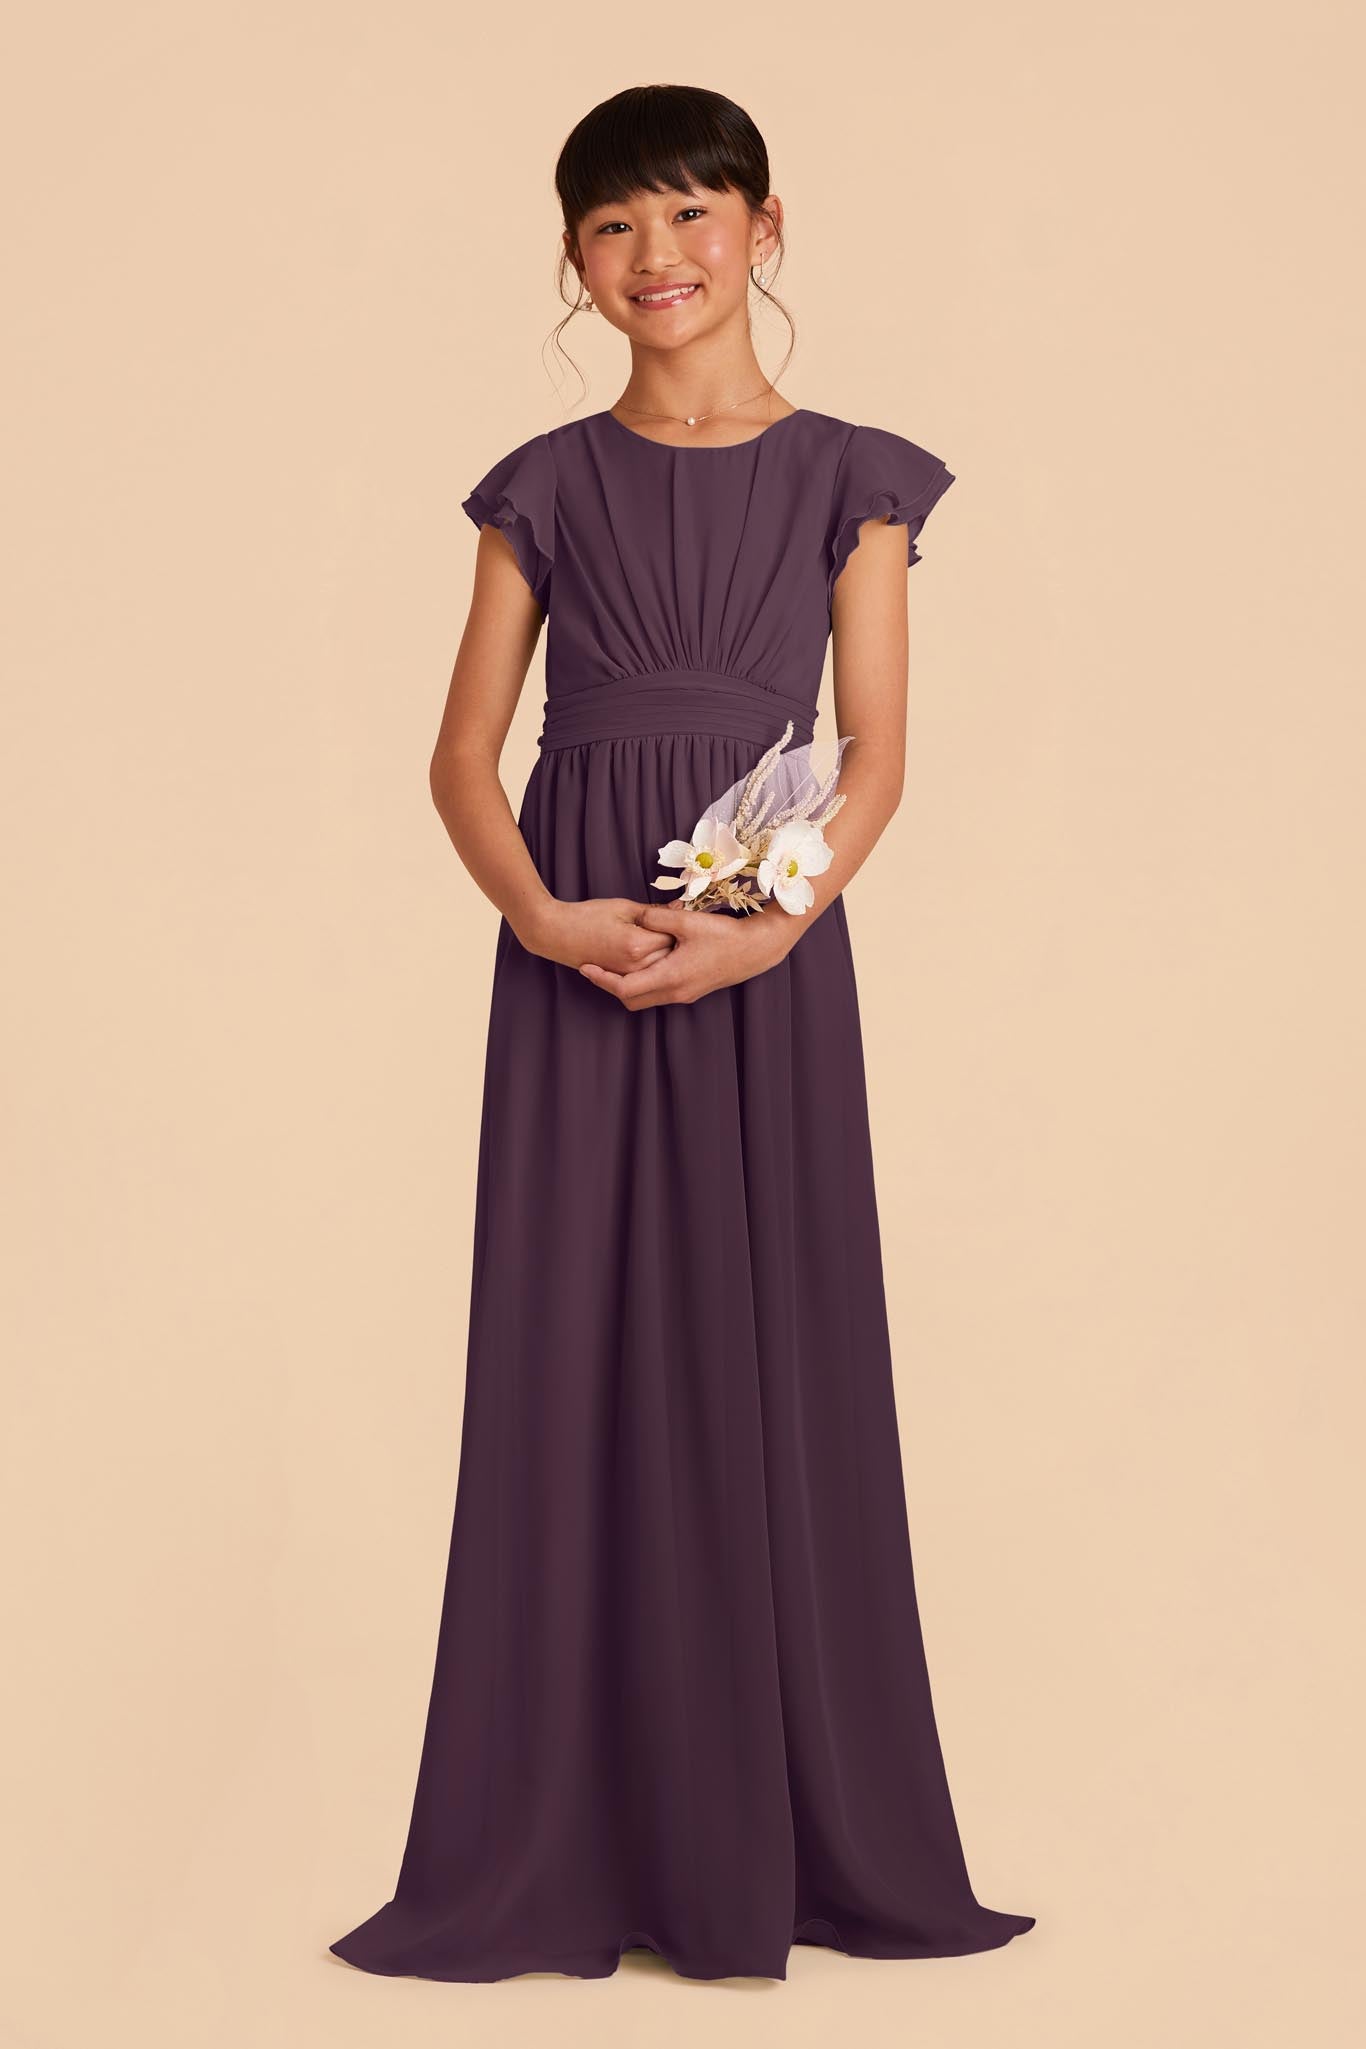 Plum Celine Convertible Dress by Birdy Grey